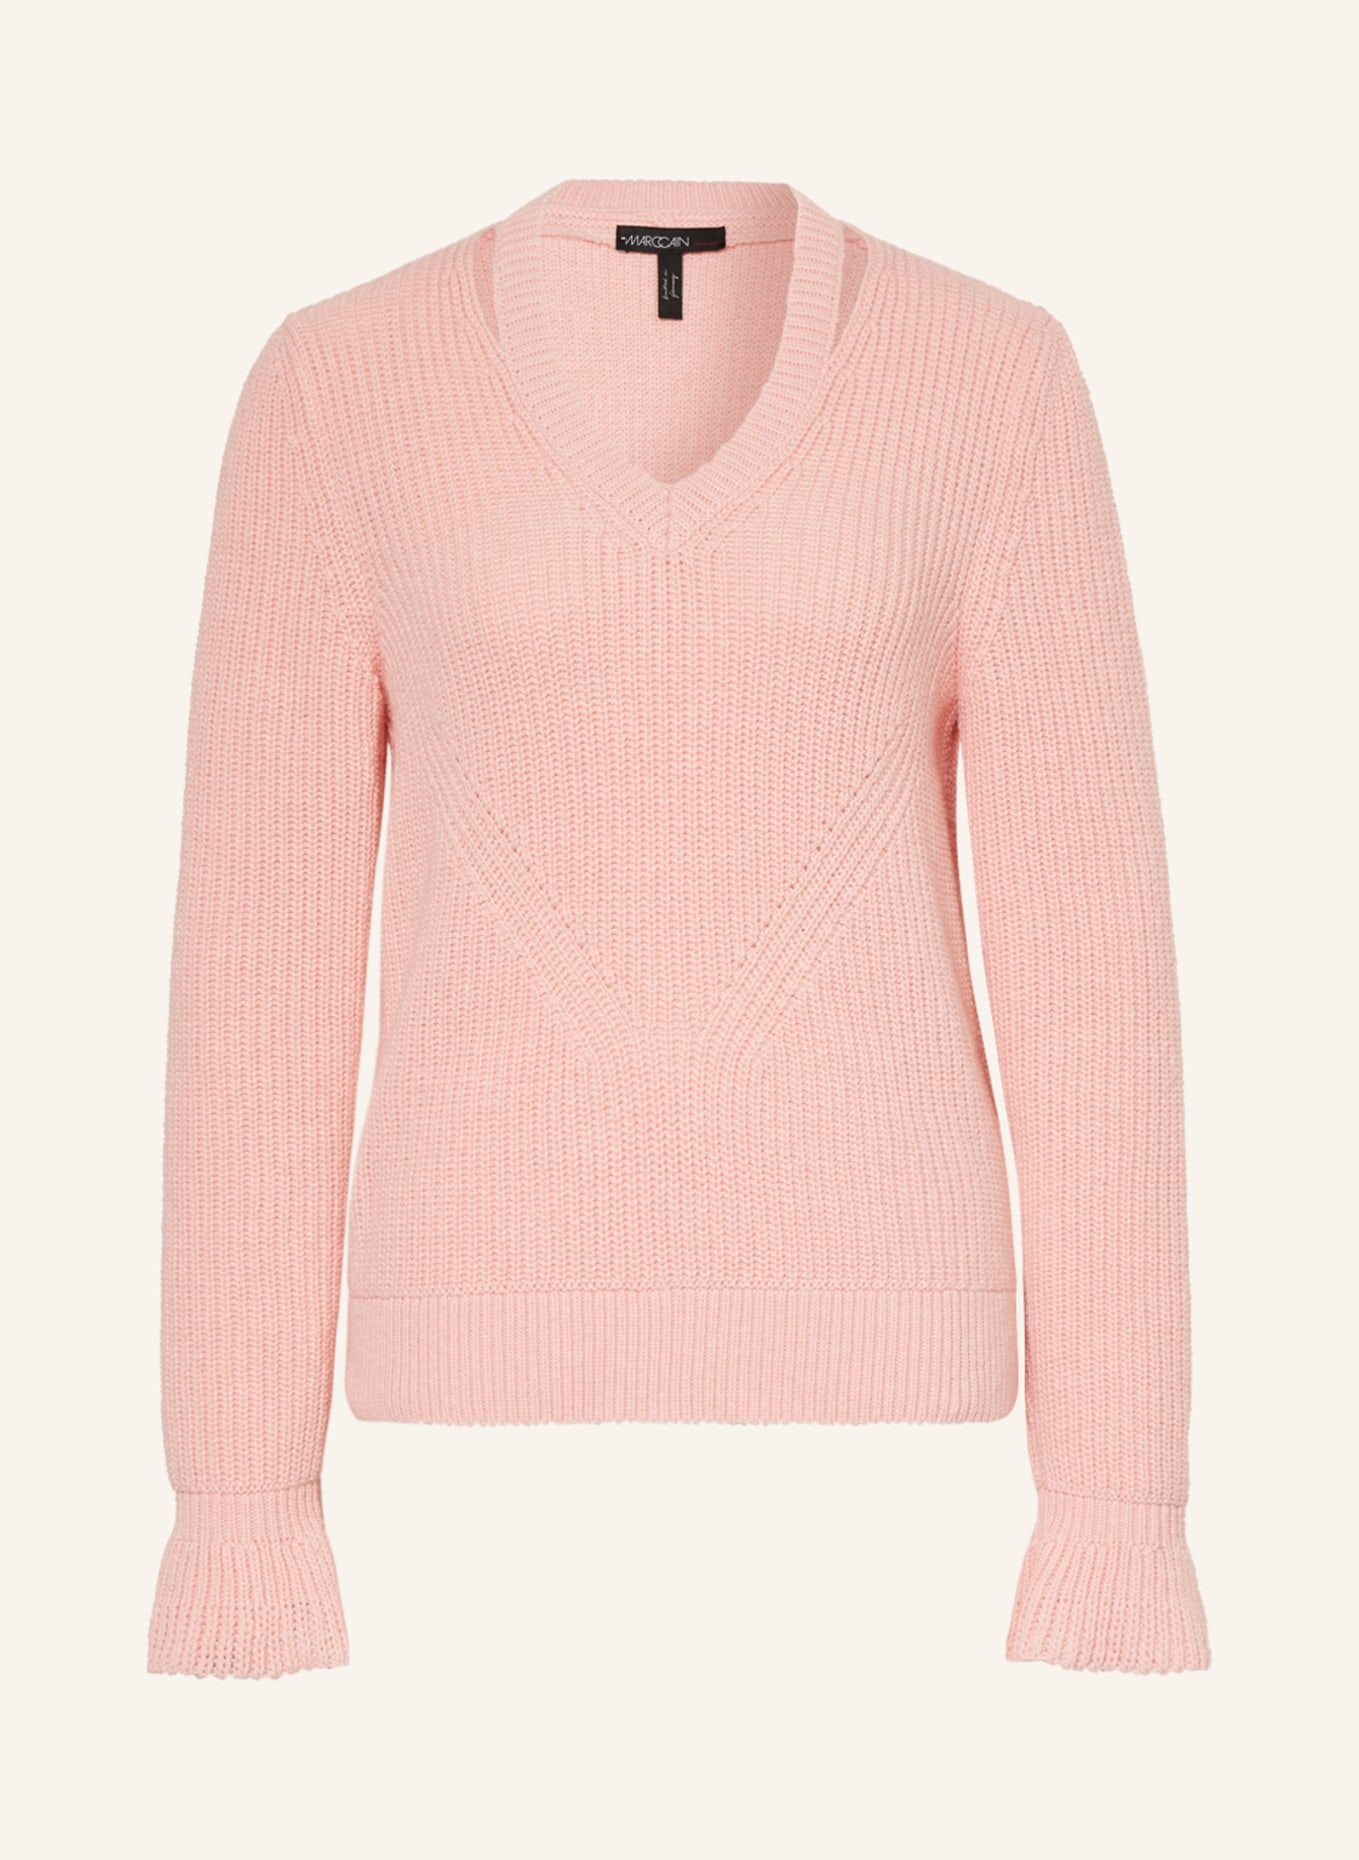 MARC CAIN Pullover, Farbe: 210 soft powder pink (Bild 1)